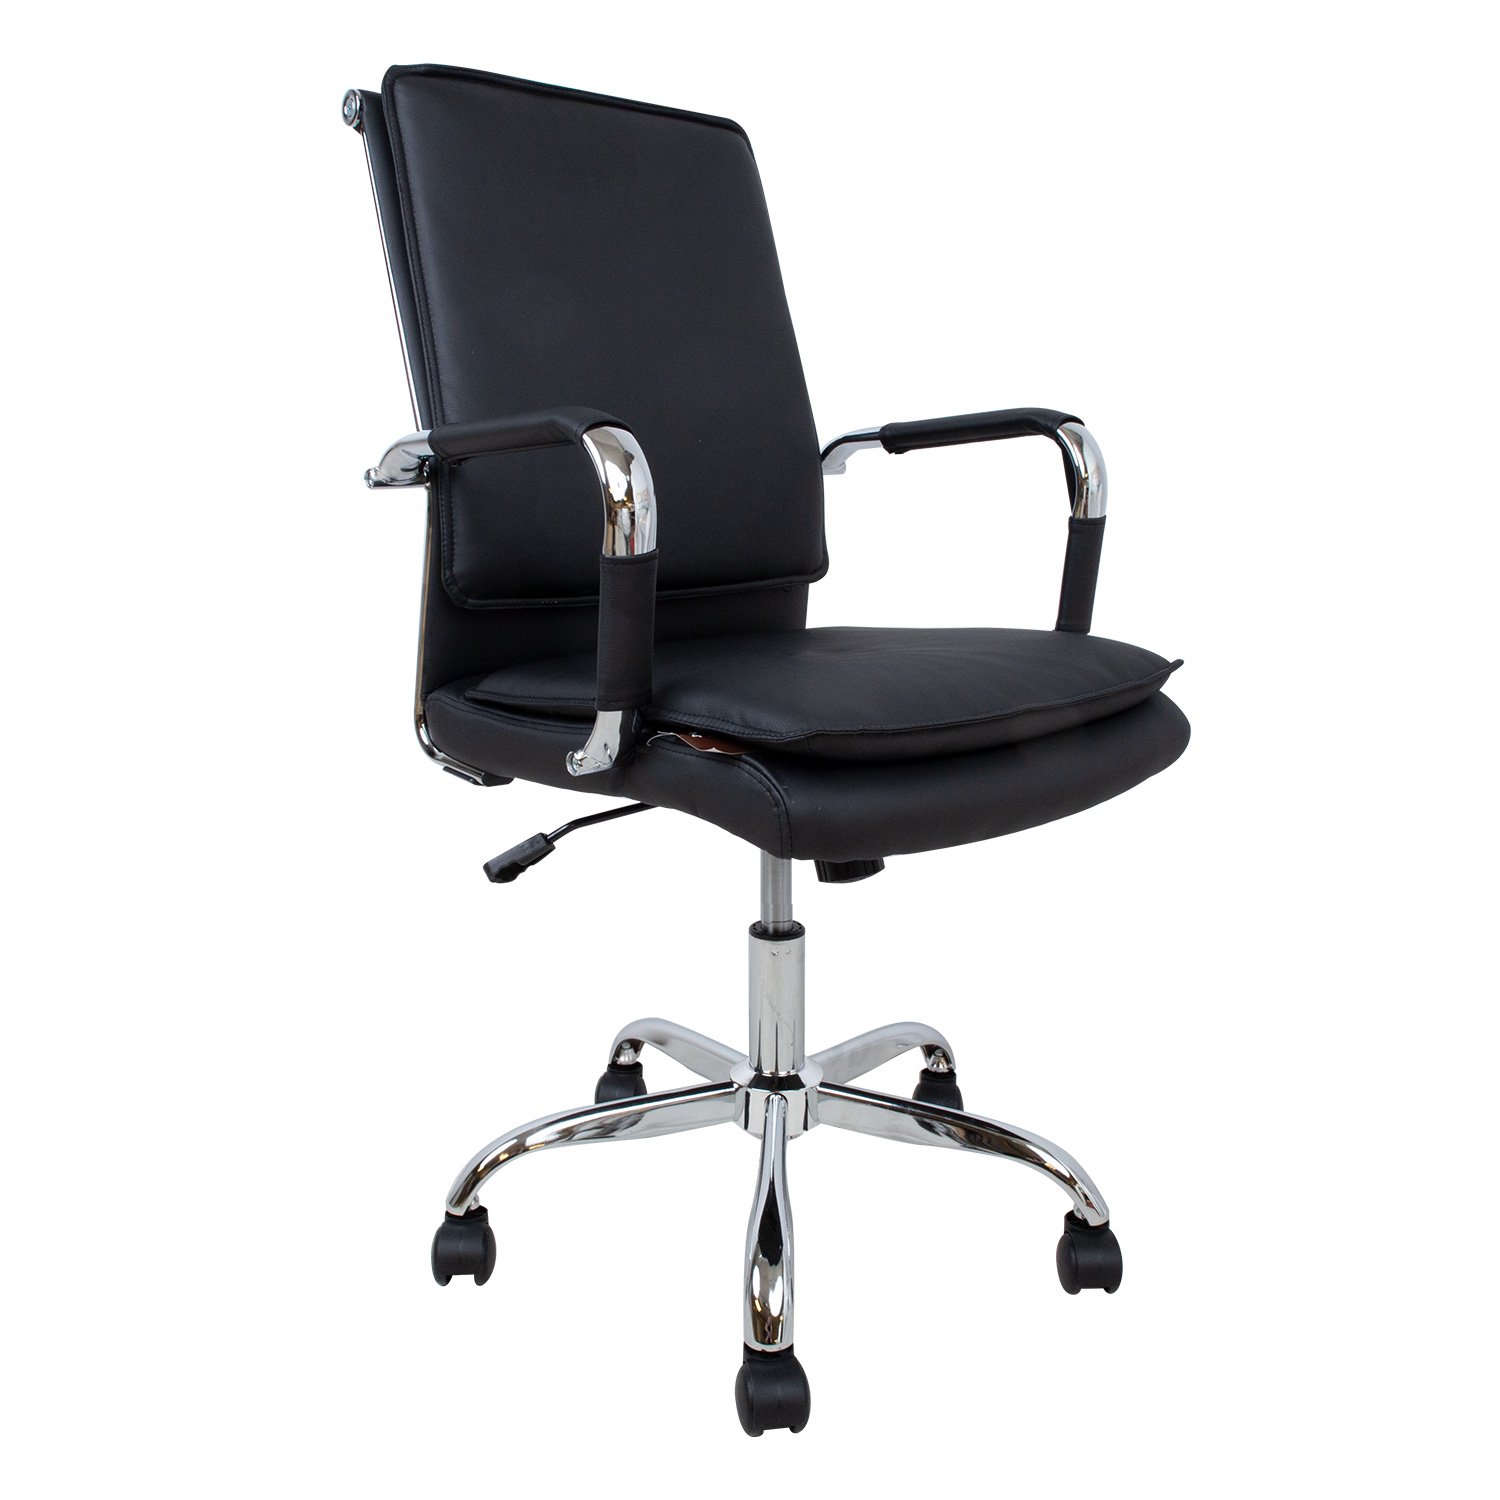 Biuro kėdė ULTRA, 54,5x63xH94-104 cm, juoda - 1